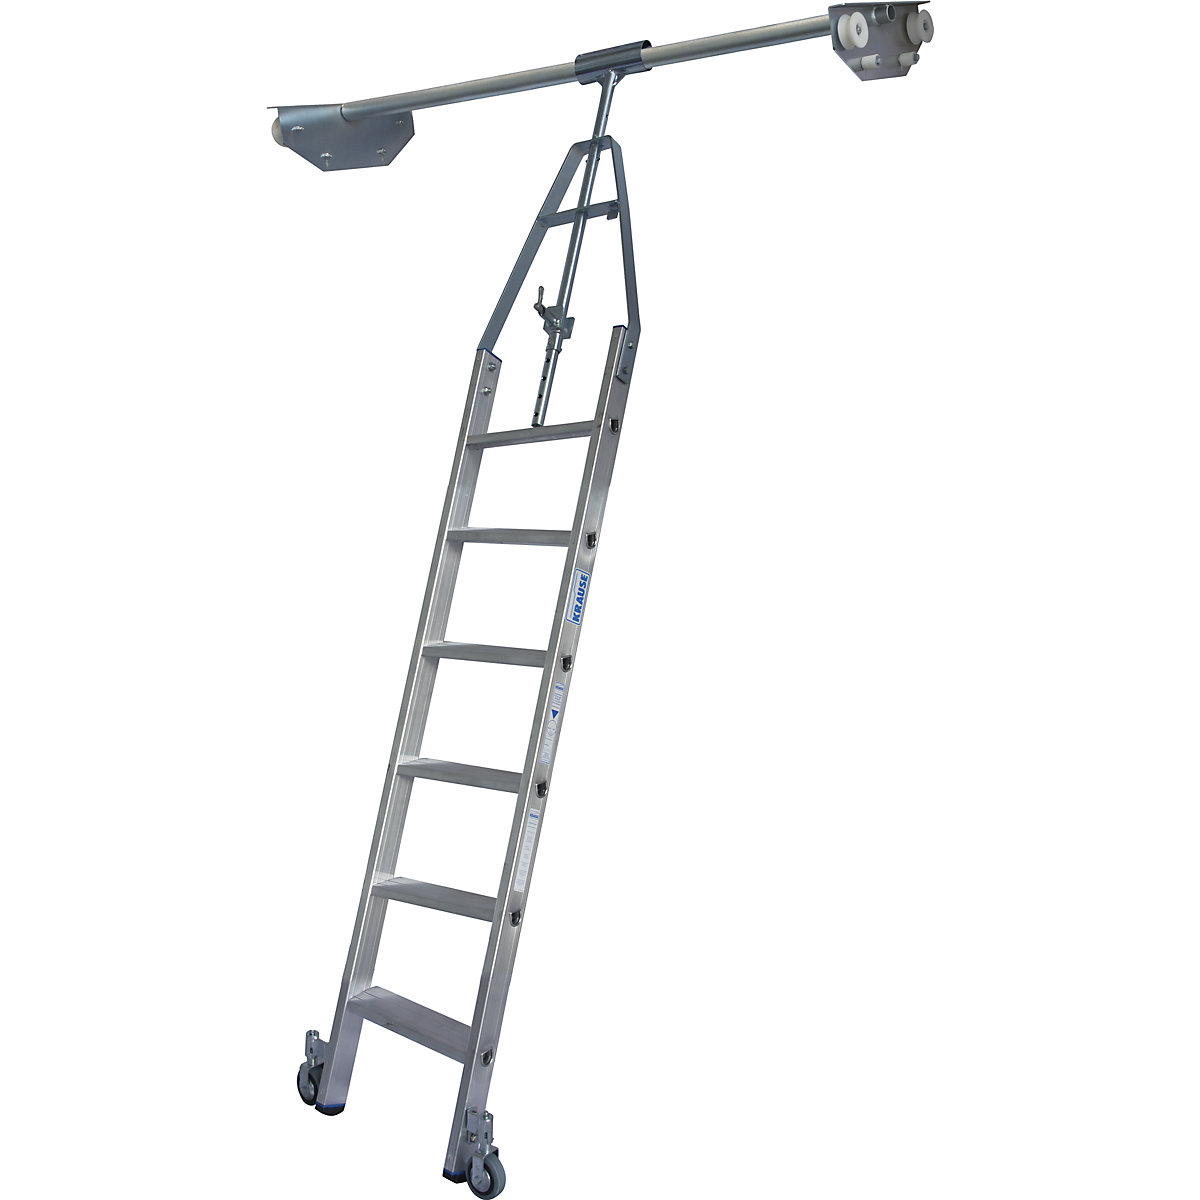 Step shelf ladder - KRAUSE